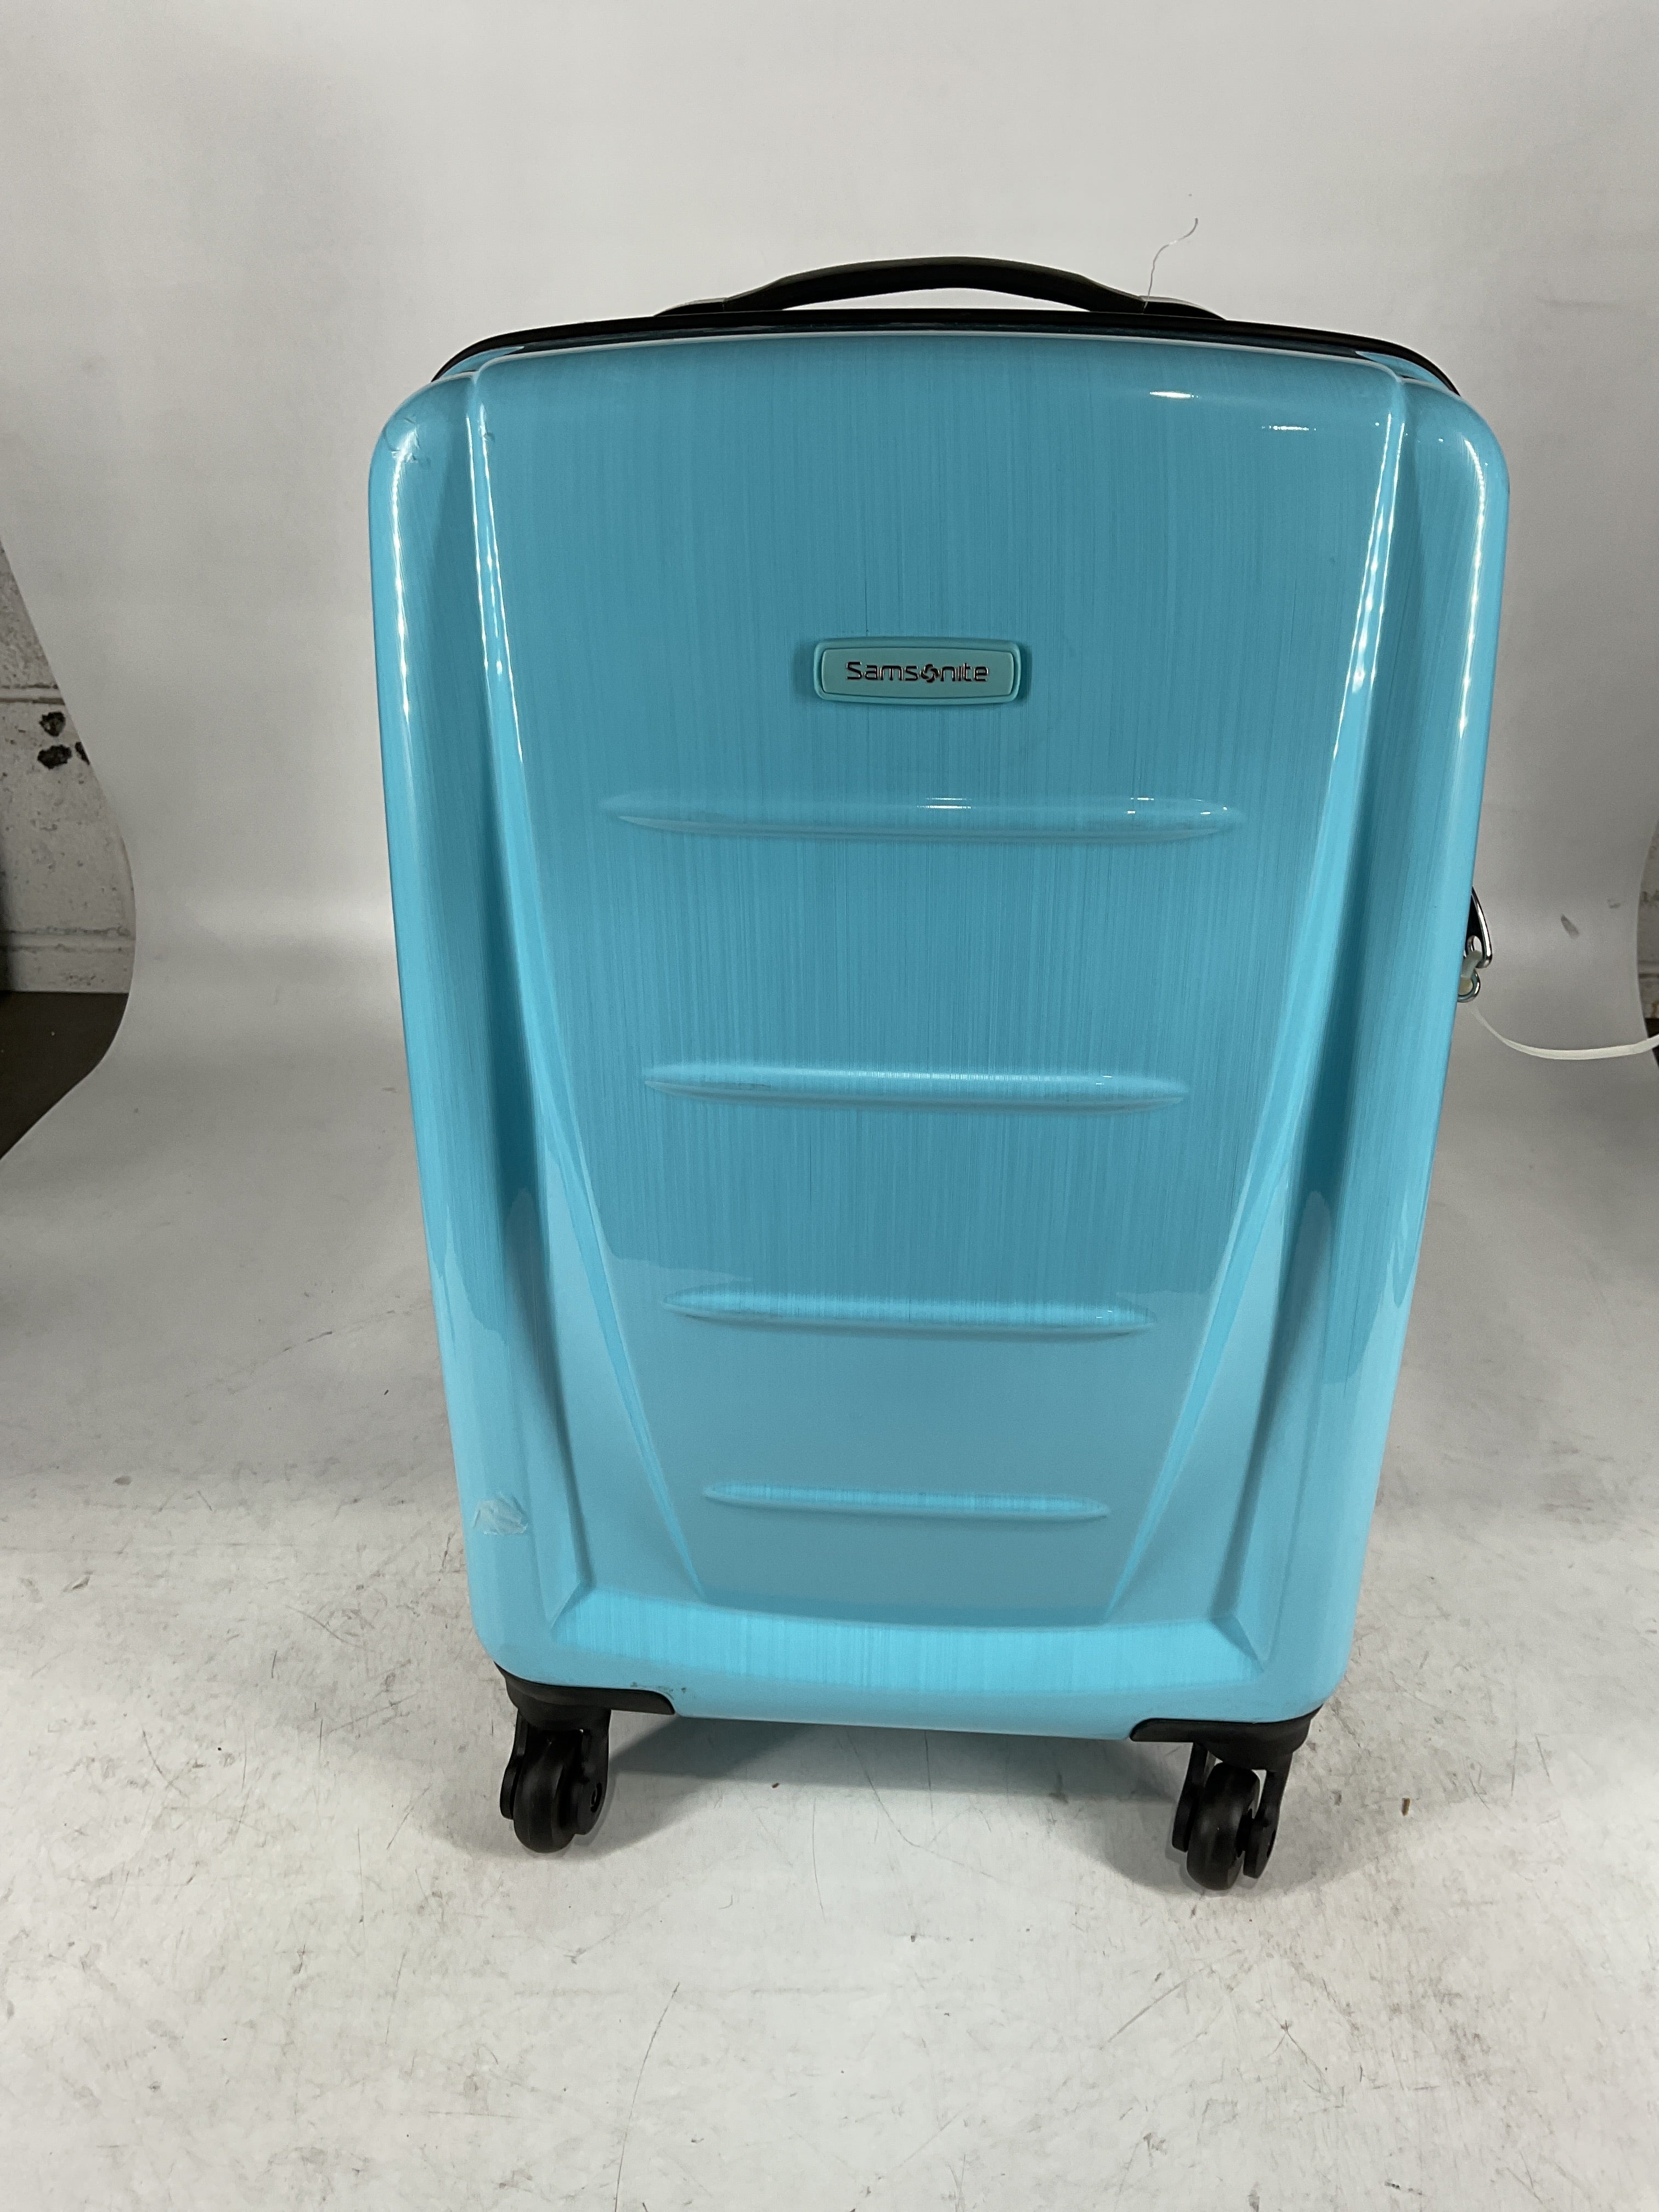 Samsonite Winfield 2 Hardside Luggage with Spinner Wheels U2